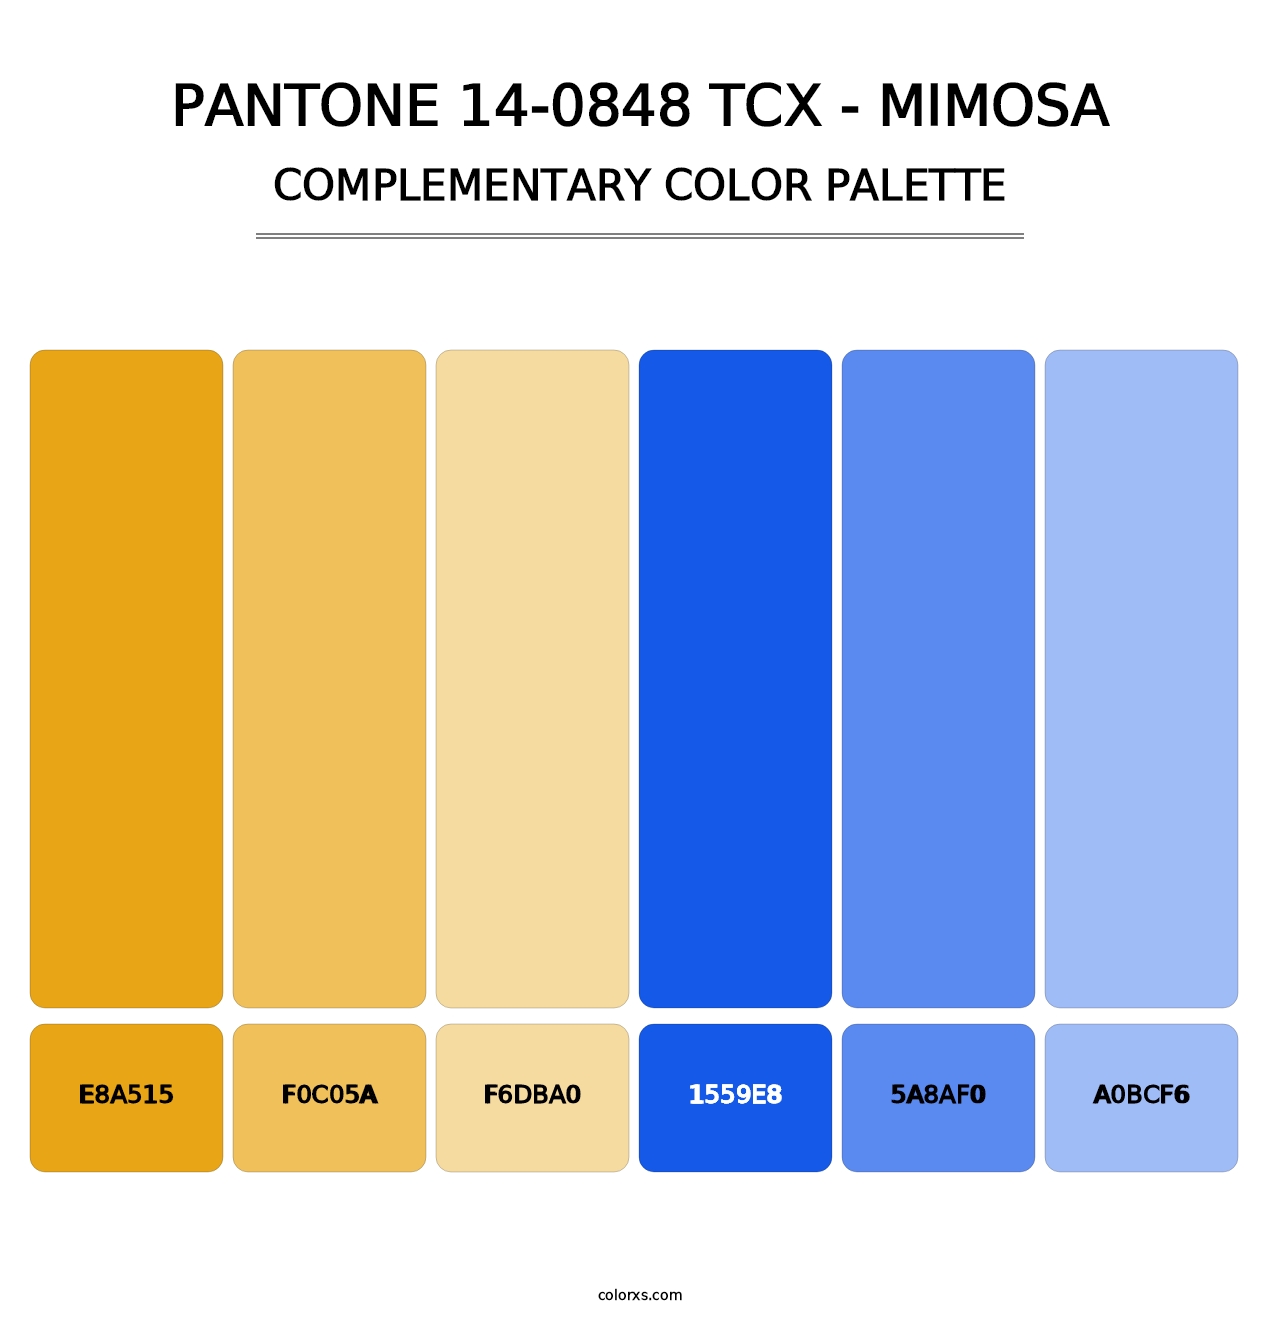 PANTONE 14-0848 TCX - Mimosa - Complementary Color Palette